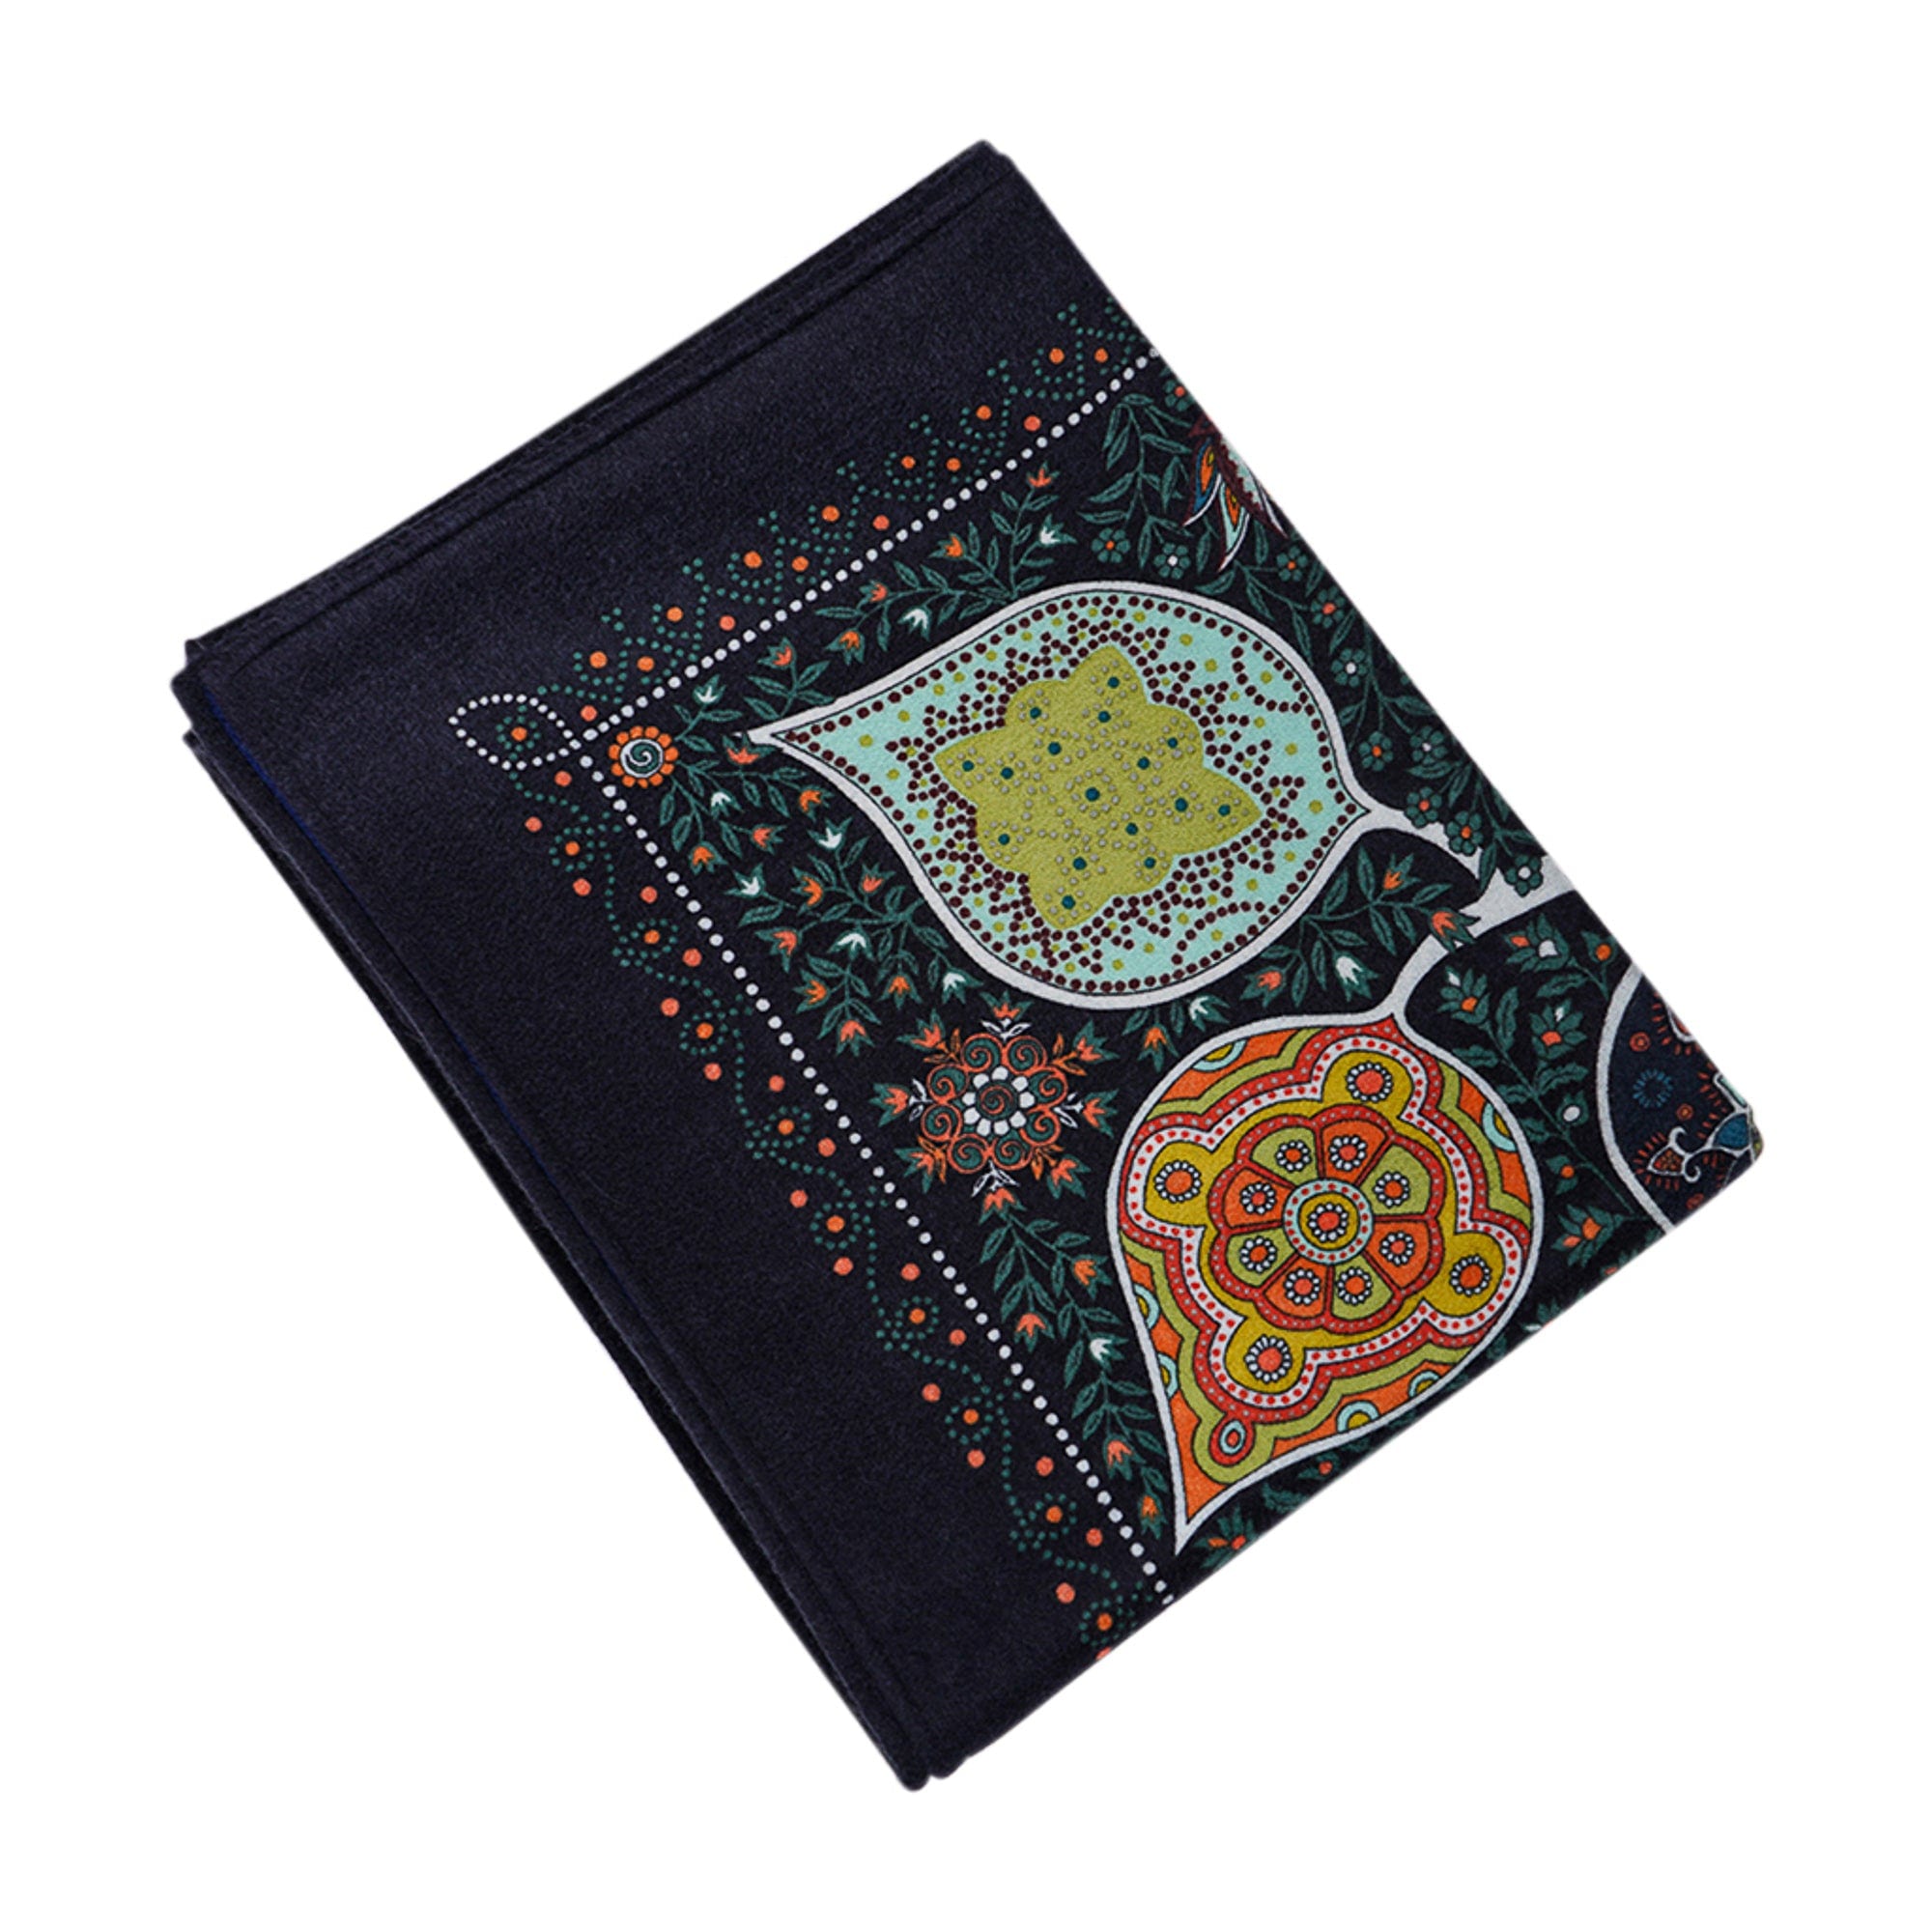 Hermes Blanket Tree of Life Blanket Multicolored Cashmere / Silk